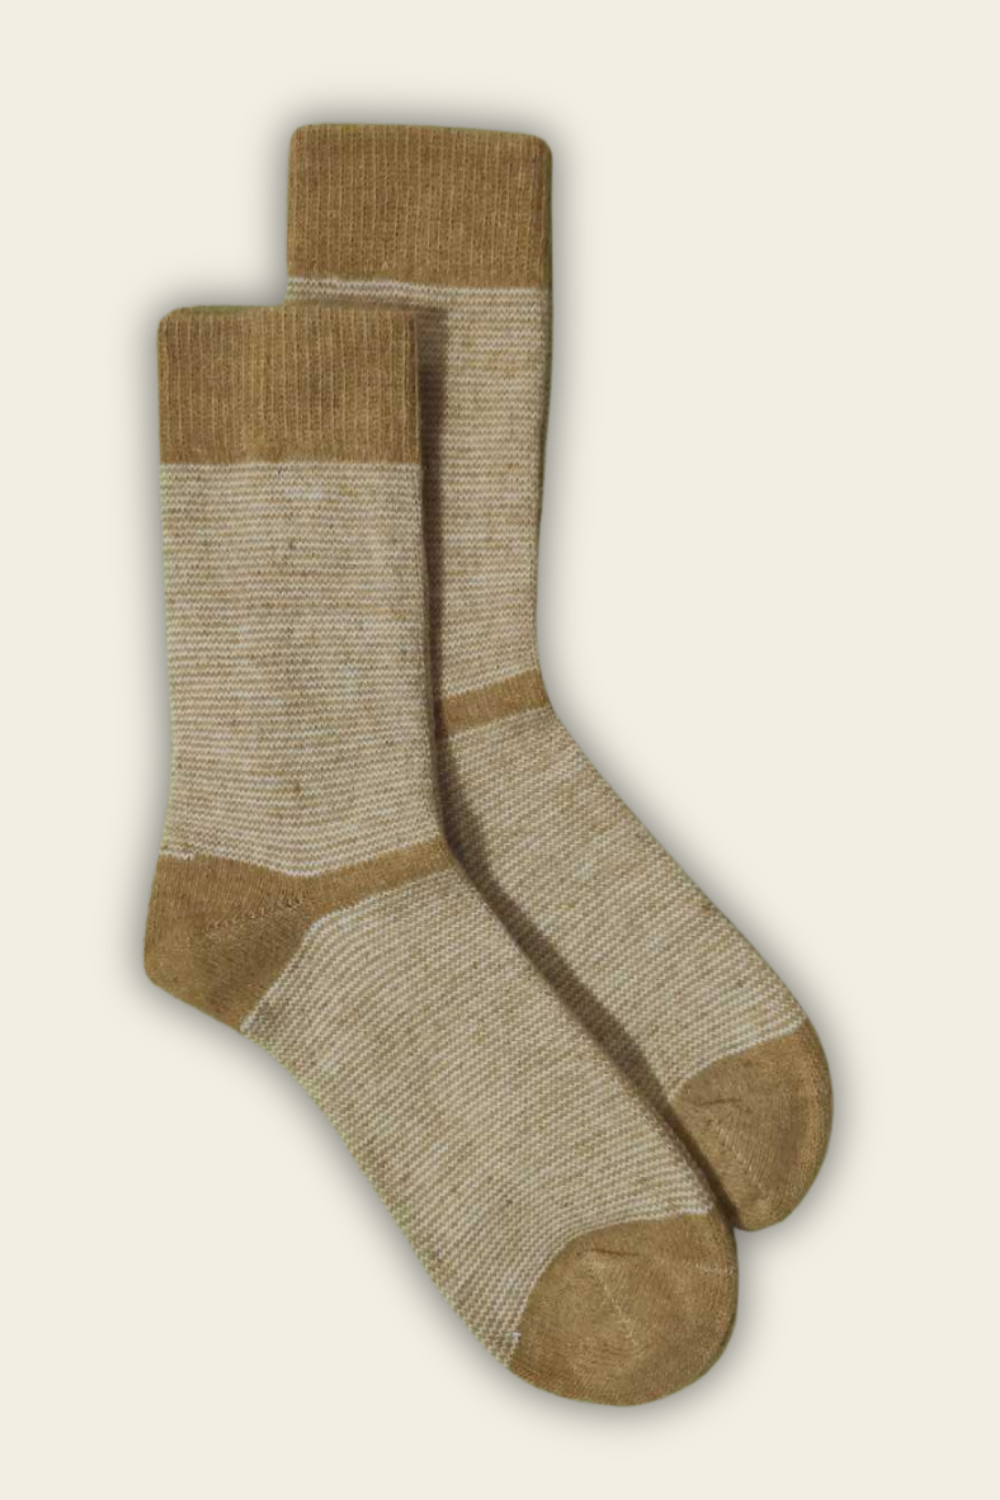 Socken mit Alpaka und Merino-Wolle - dunkelgelb - 2 Paar